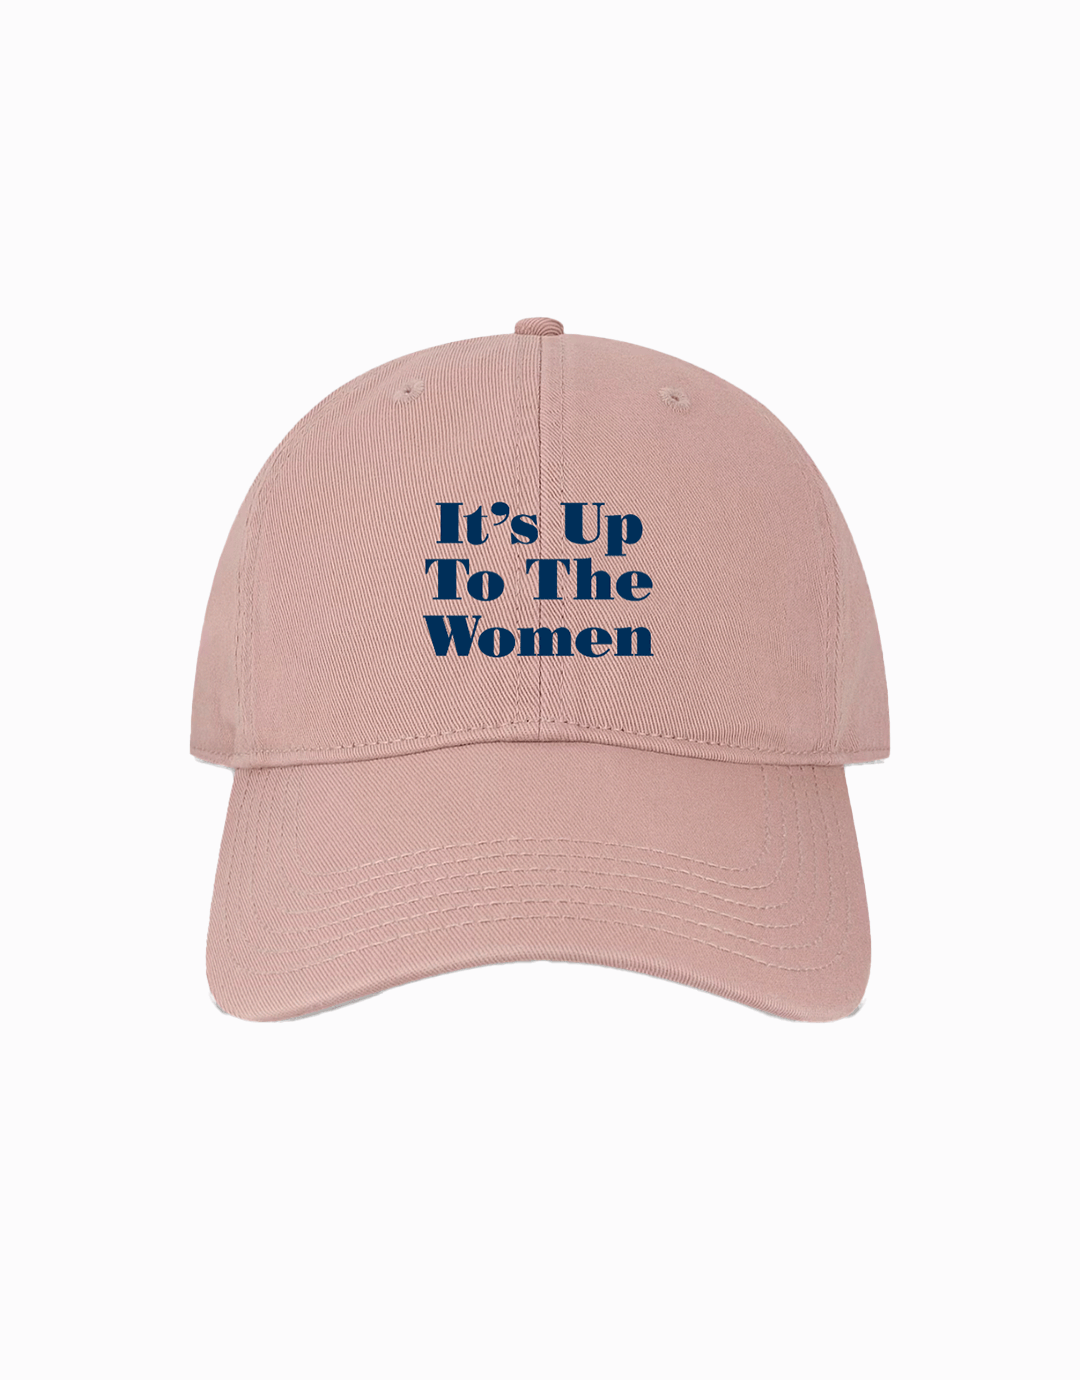 It's Up To The Women Hat - Mauve